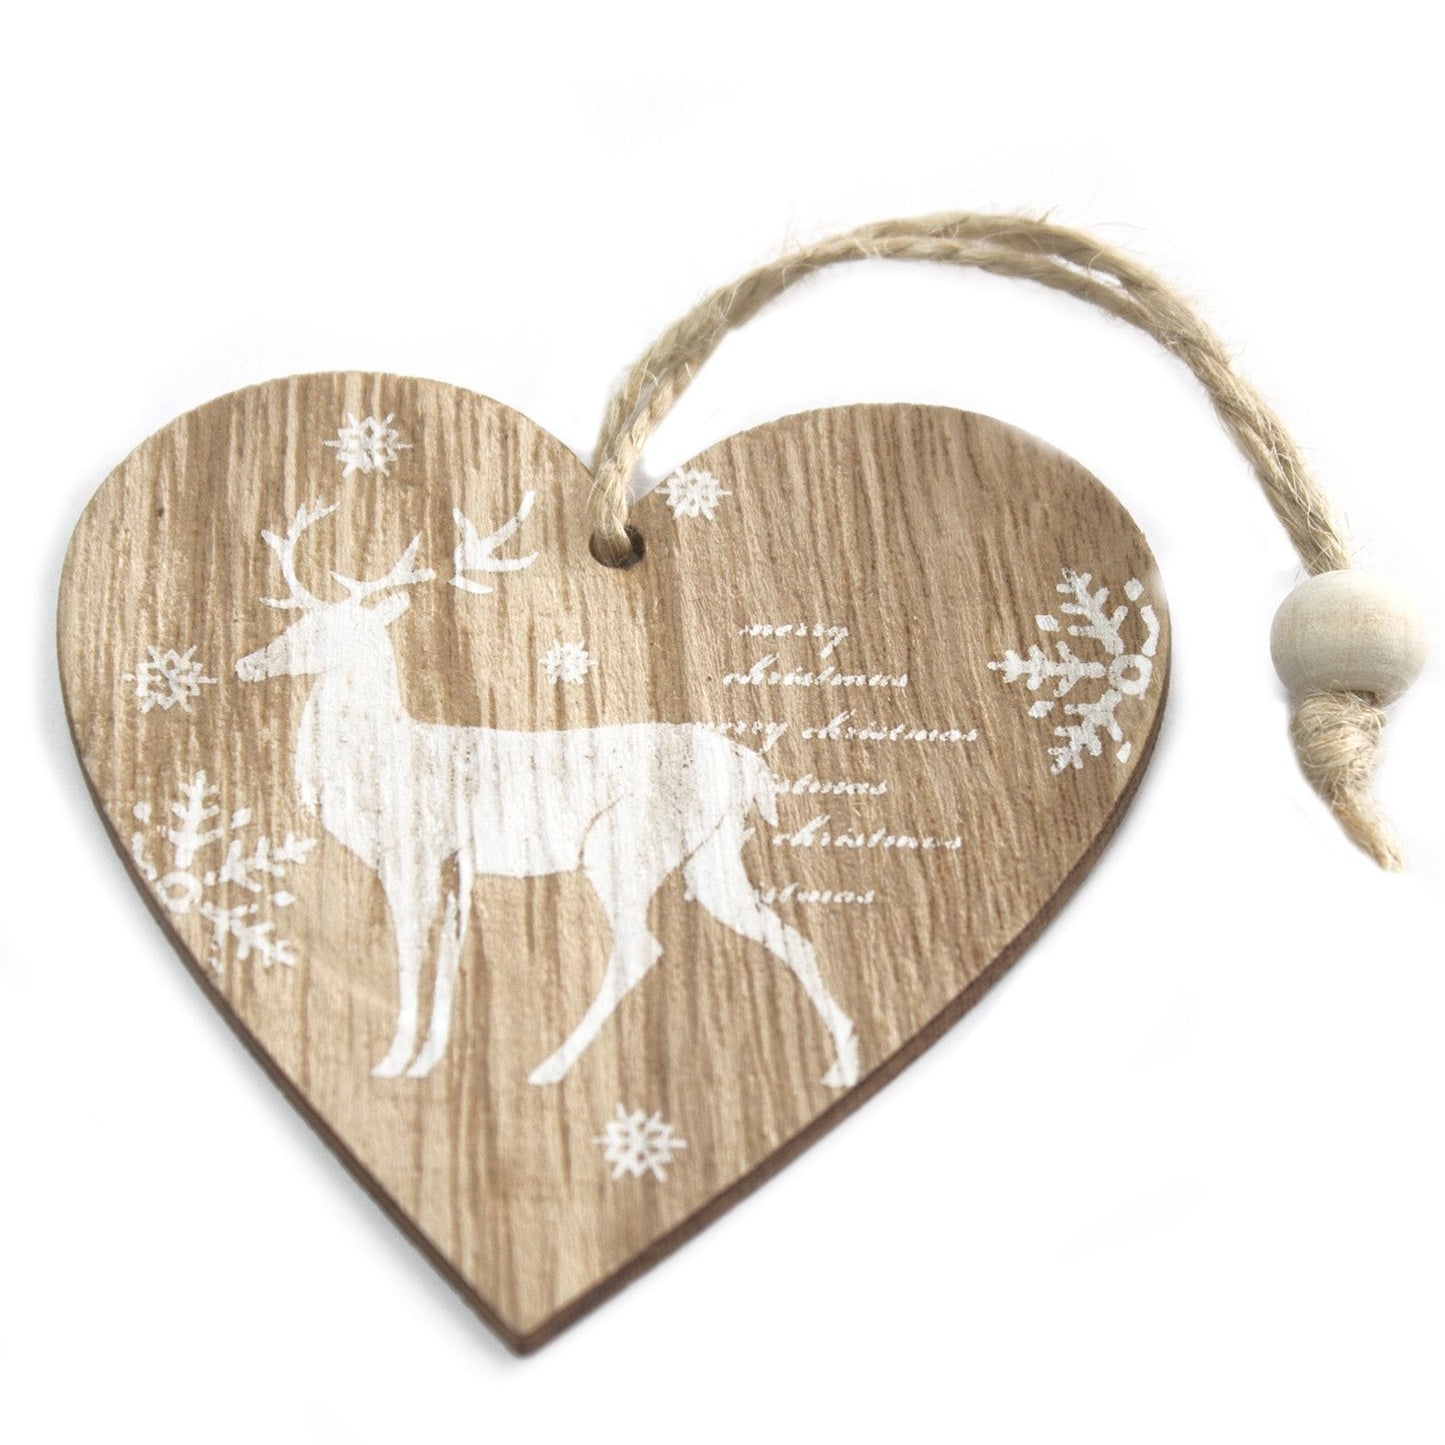 Set of 2 Handmade Wooden Christmas Decorations - Heart / Reindeer